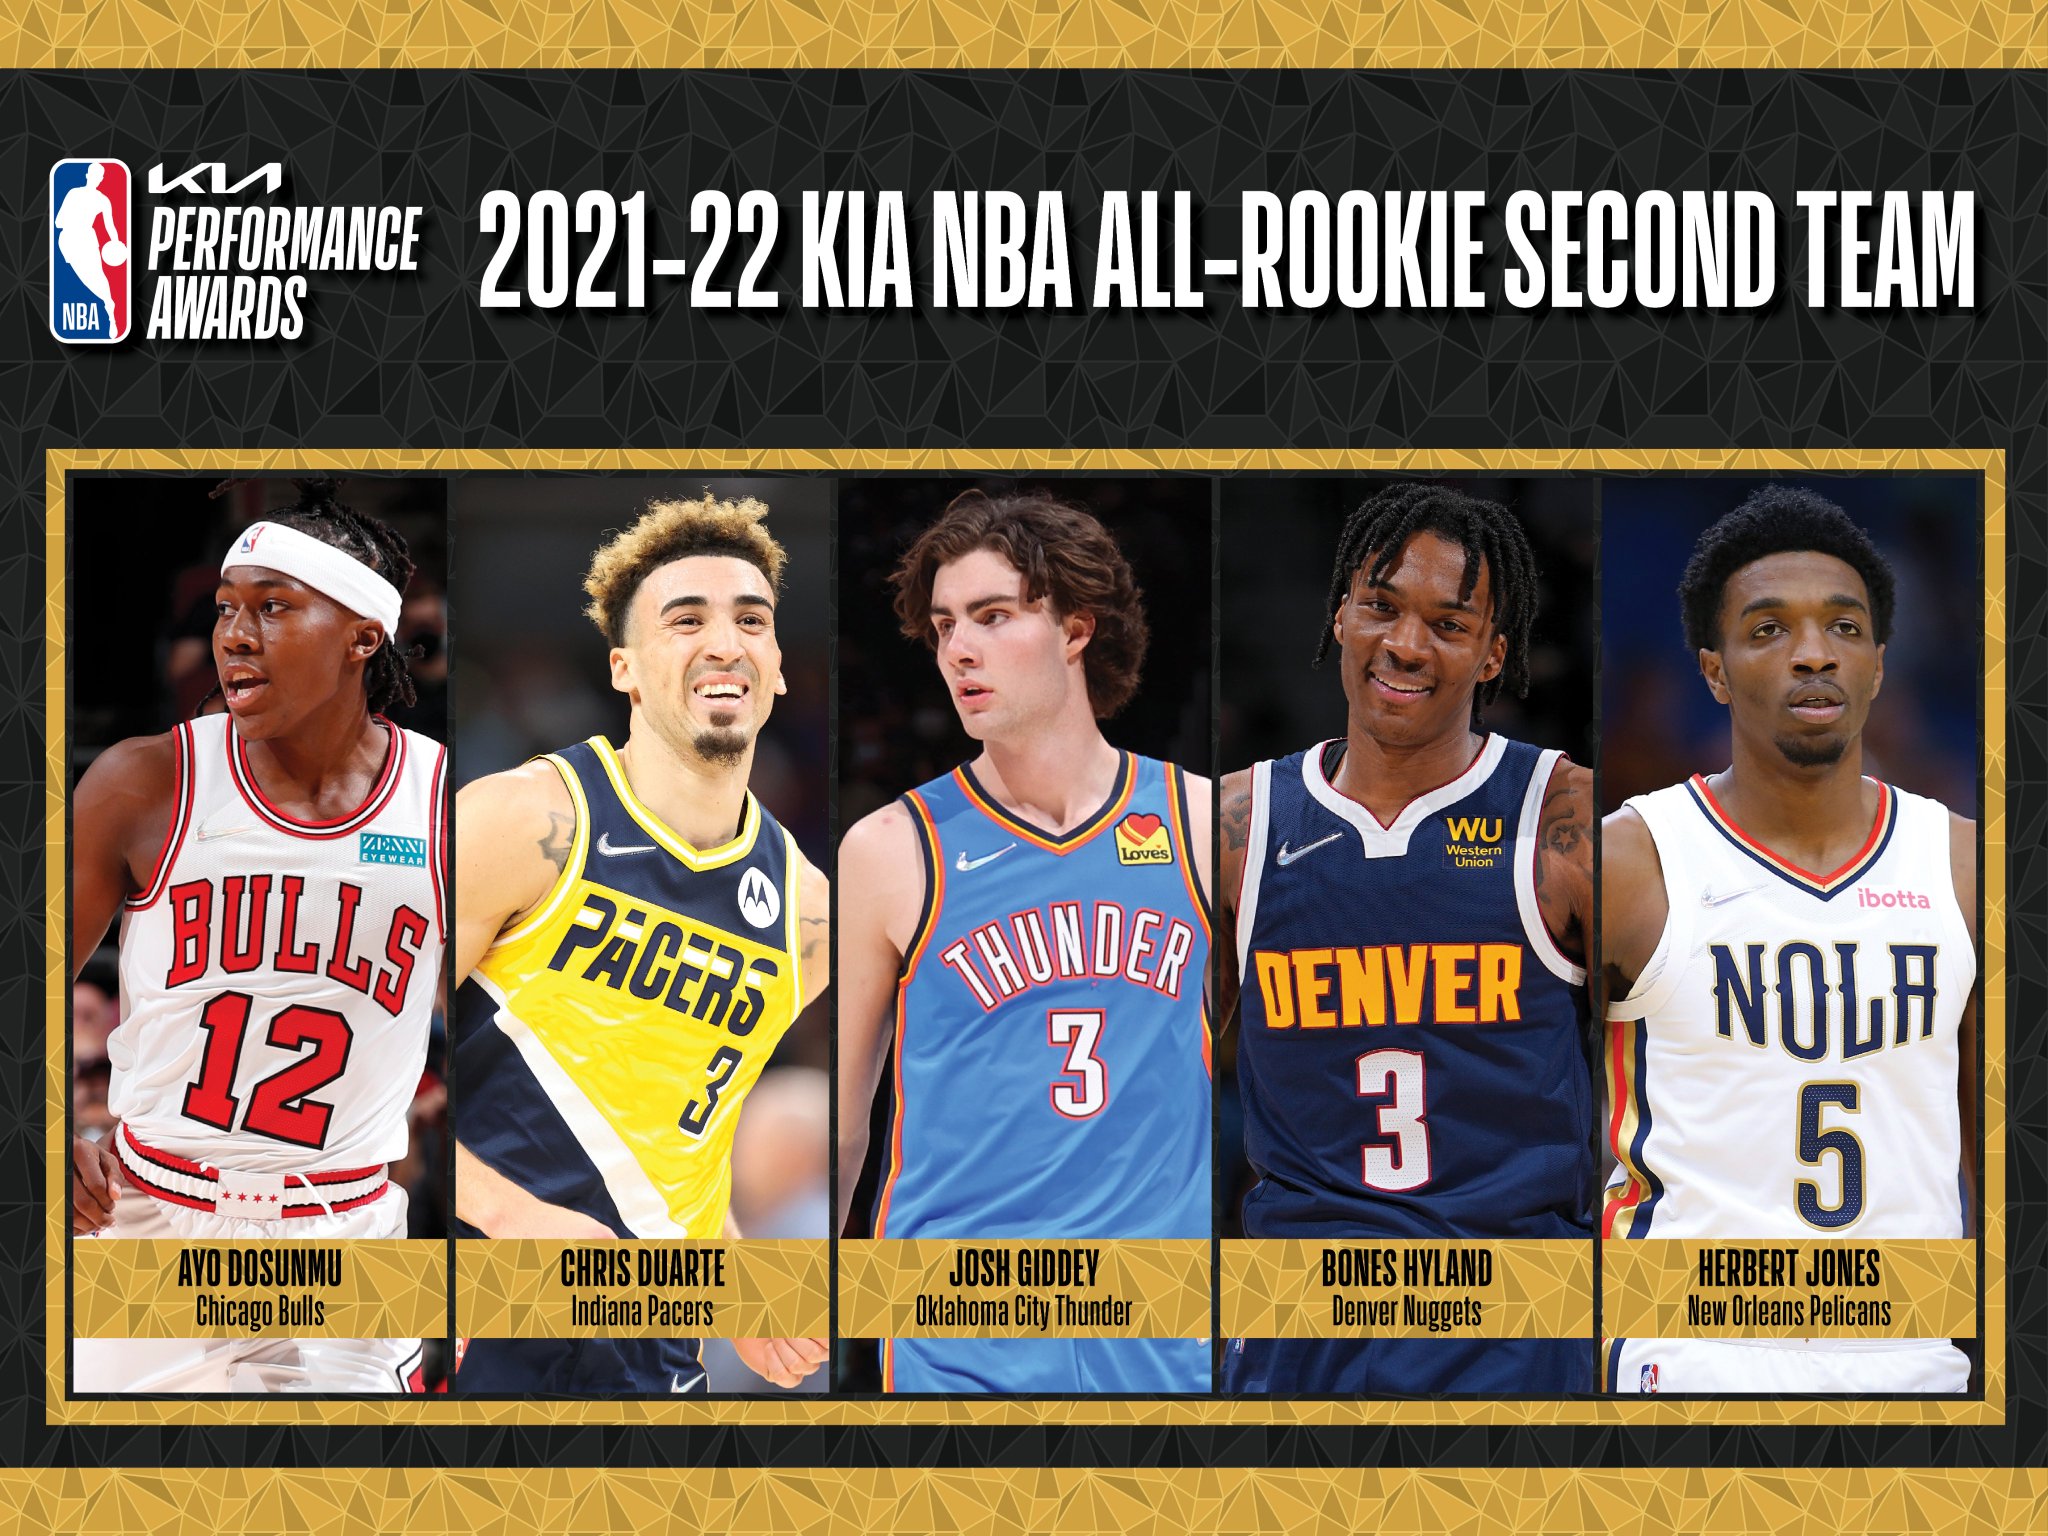 NBA Communications on Twitter "The 202122 Kia NBA AllRookie Second